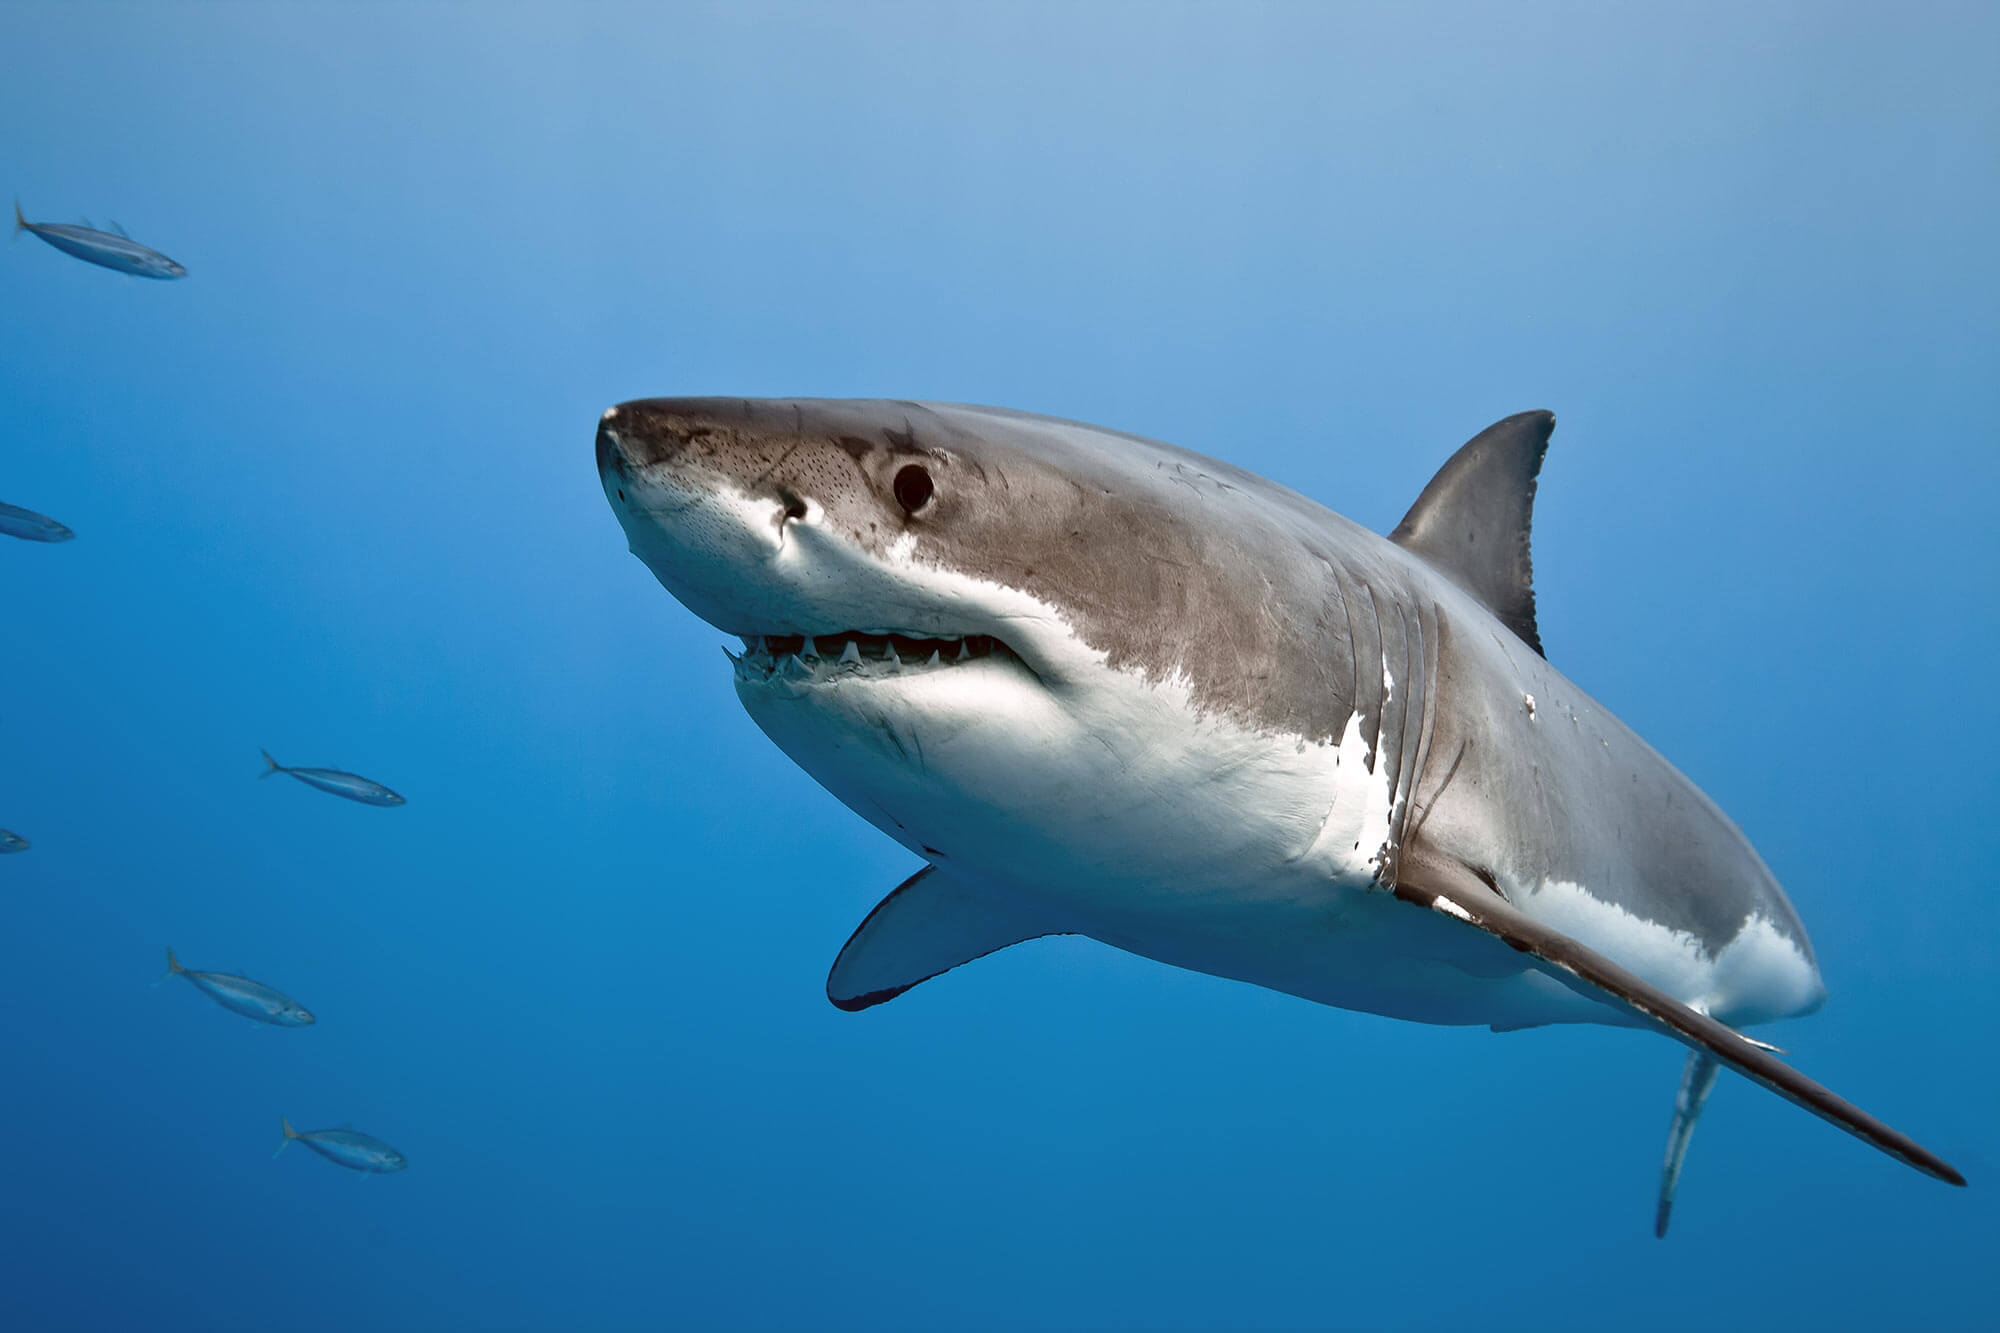 https://www.montereybayaquarium.org/globalassets/mba/images/animals/fishes/white-shark-blue-water-iStock-514322987.jpg